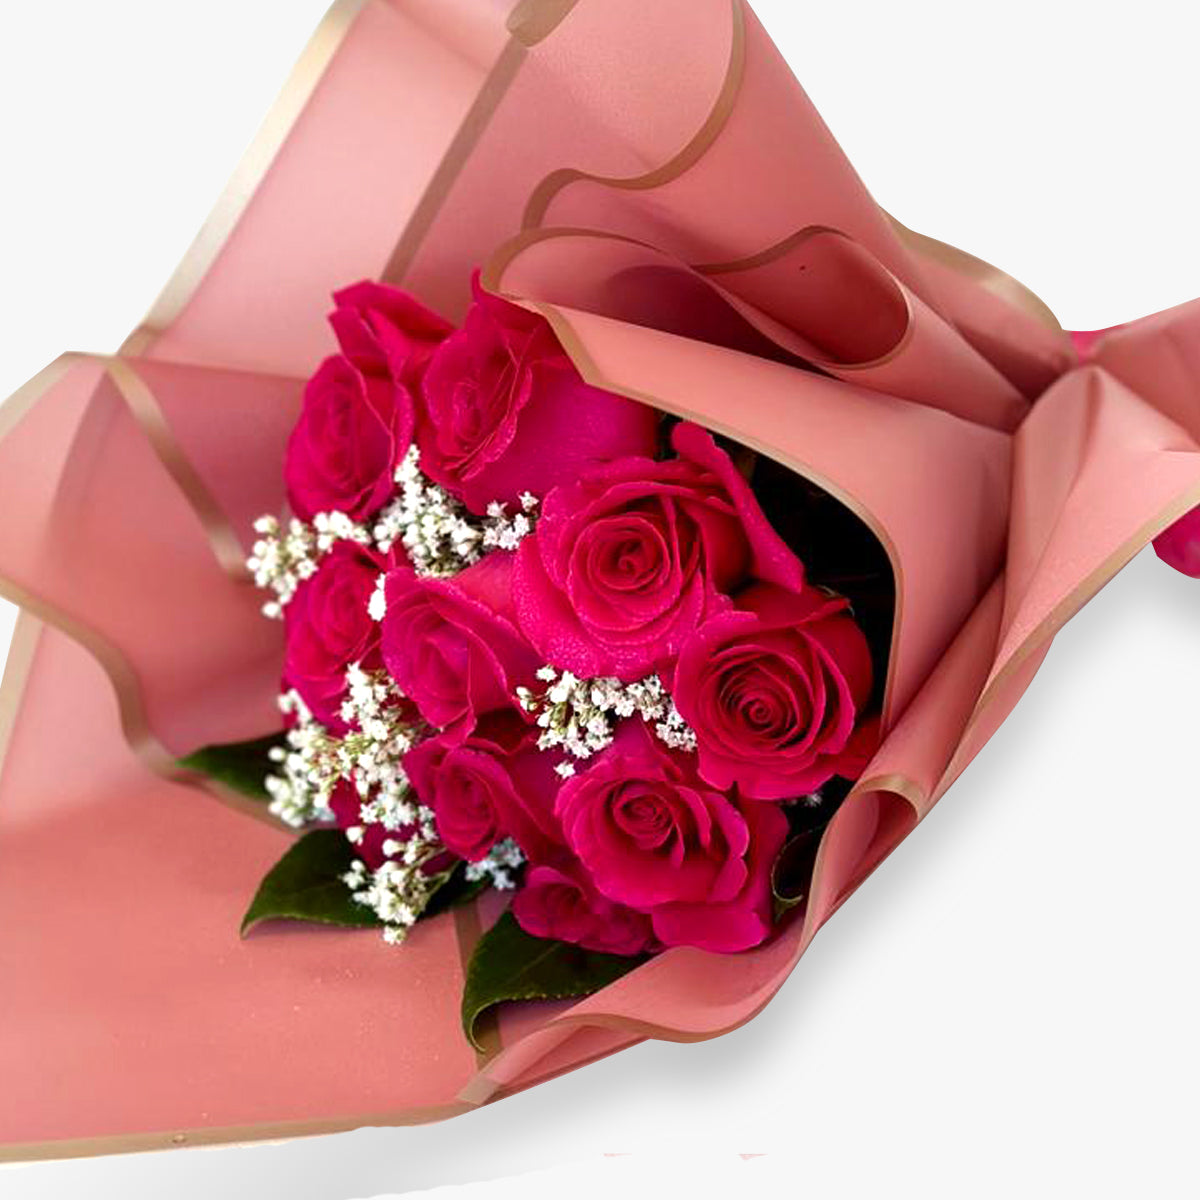 Hot Pink Rose Bouquet